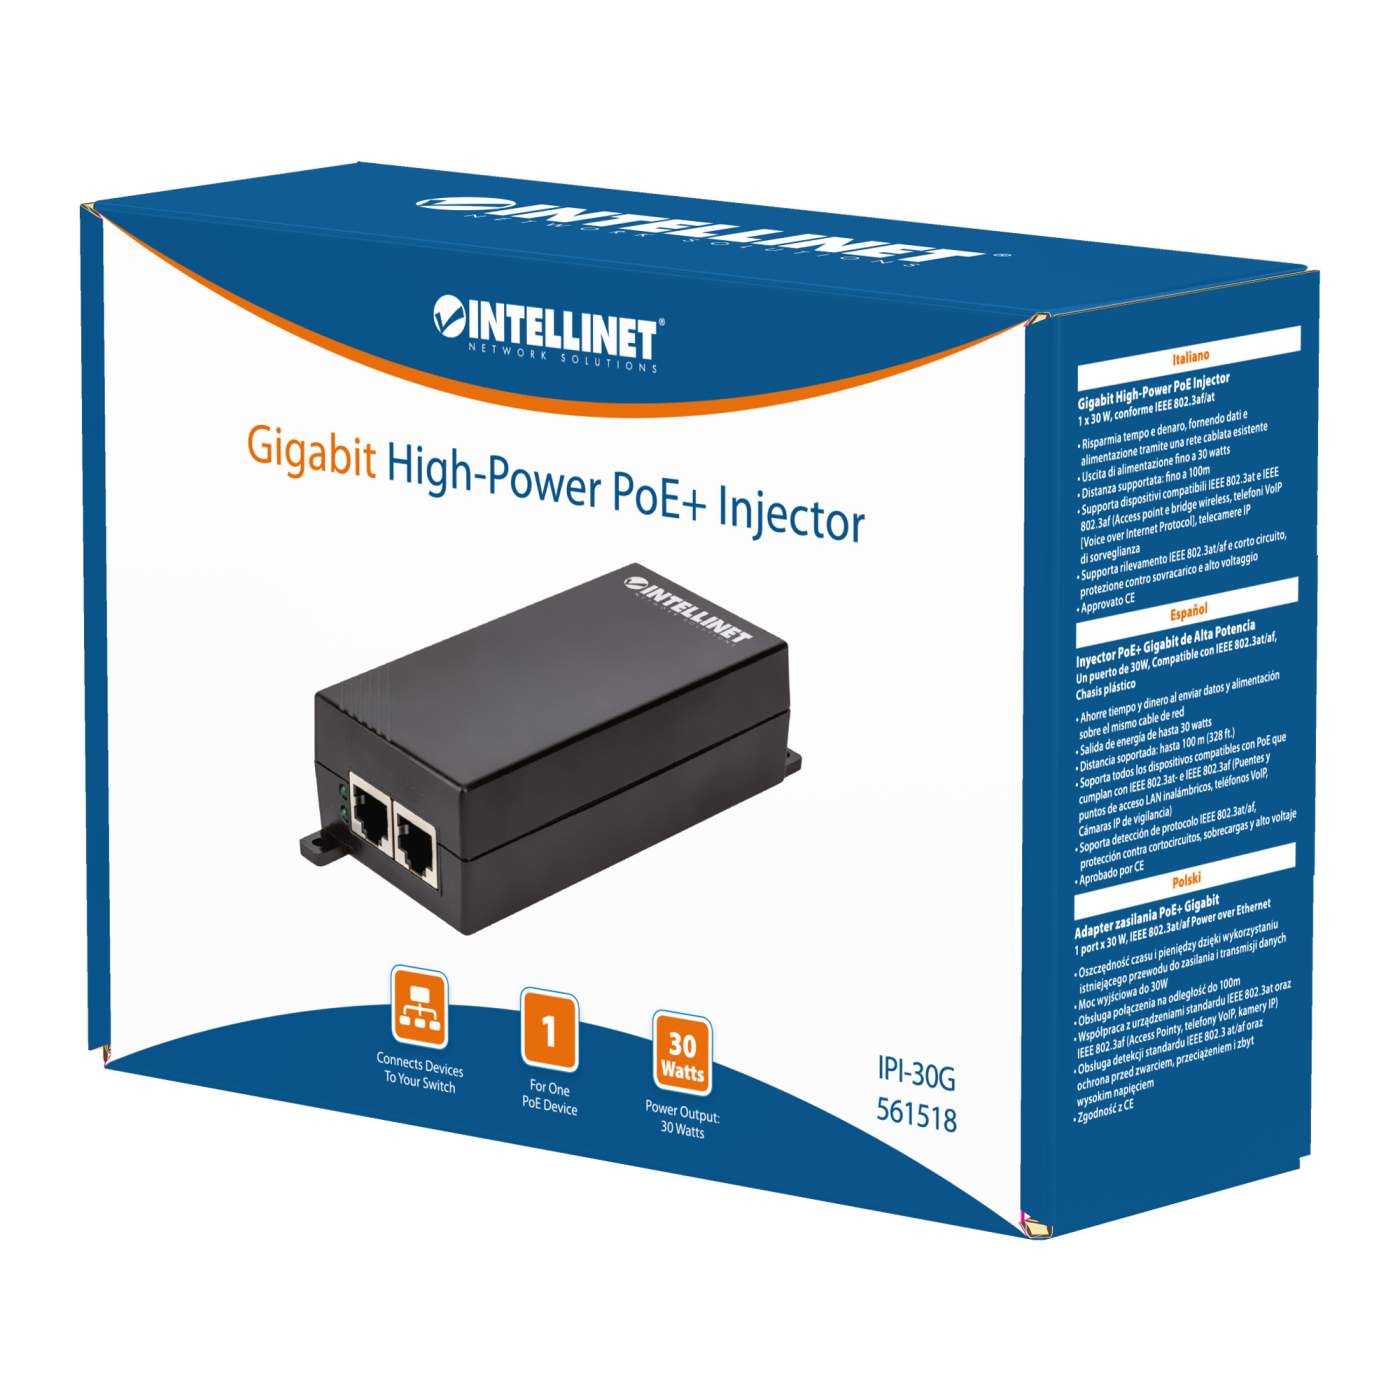 Gigabit POE+ Injector, IEEE 802.3at, 30W, 1port